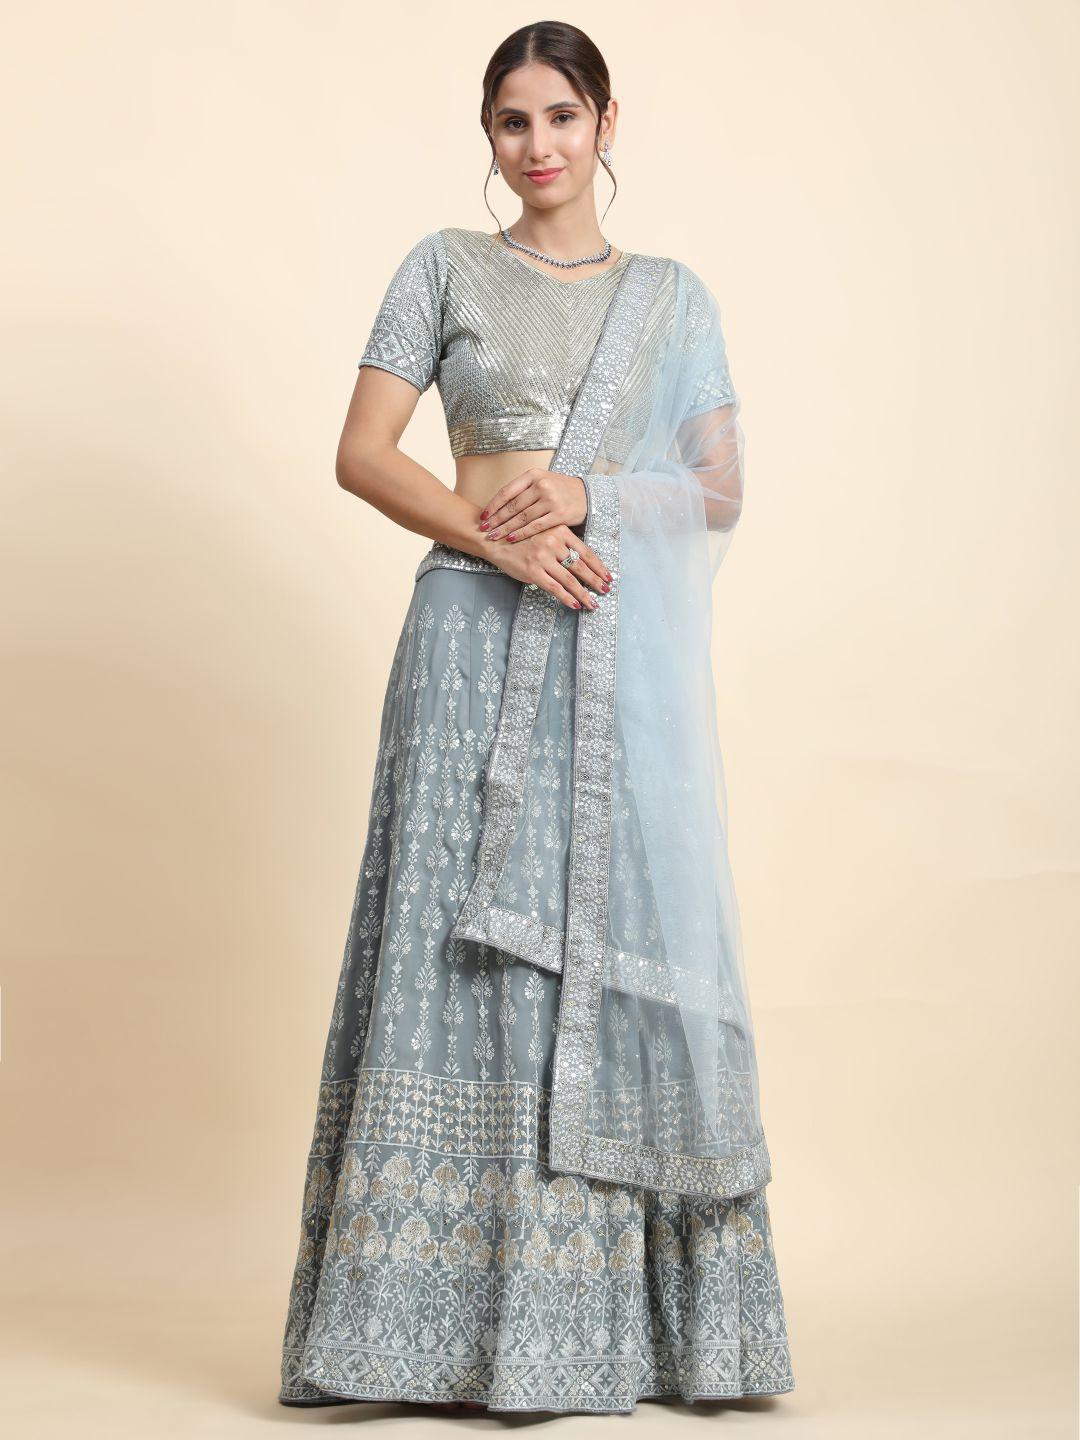 phenav grey embroidered semi-stitched lehenga & blouse with dupatta